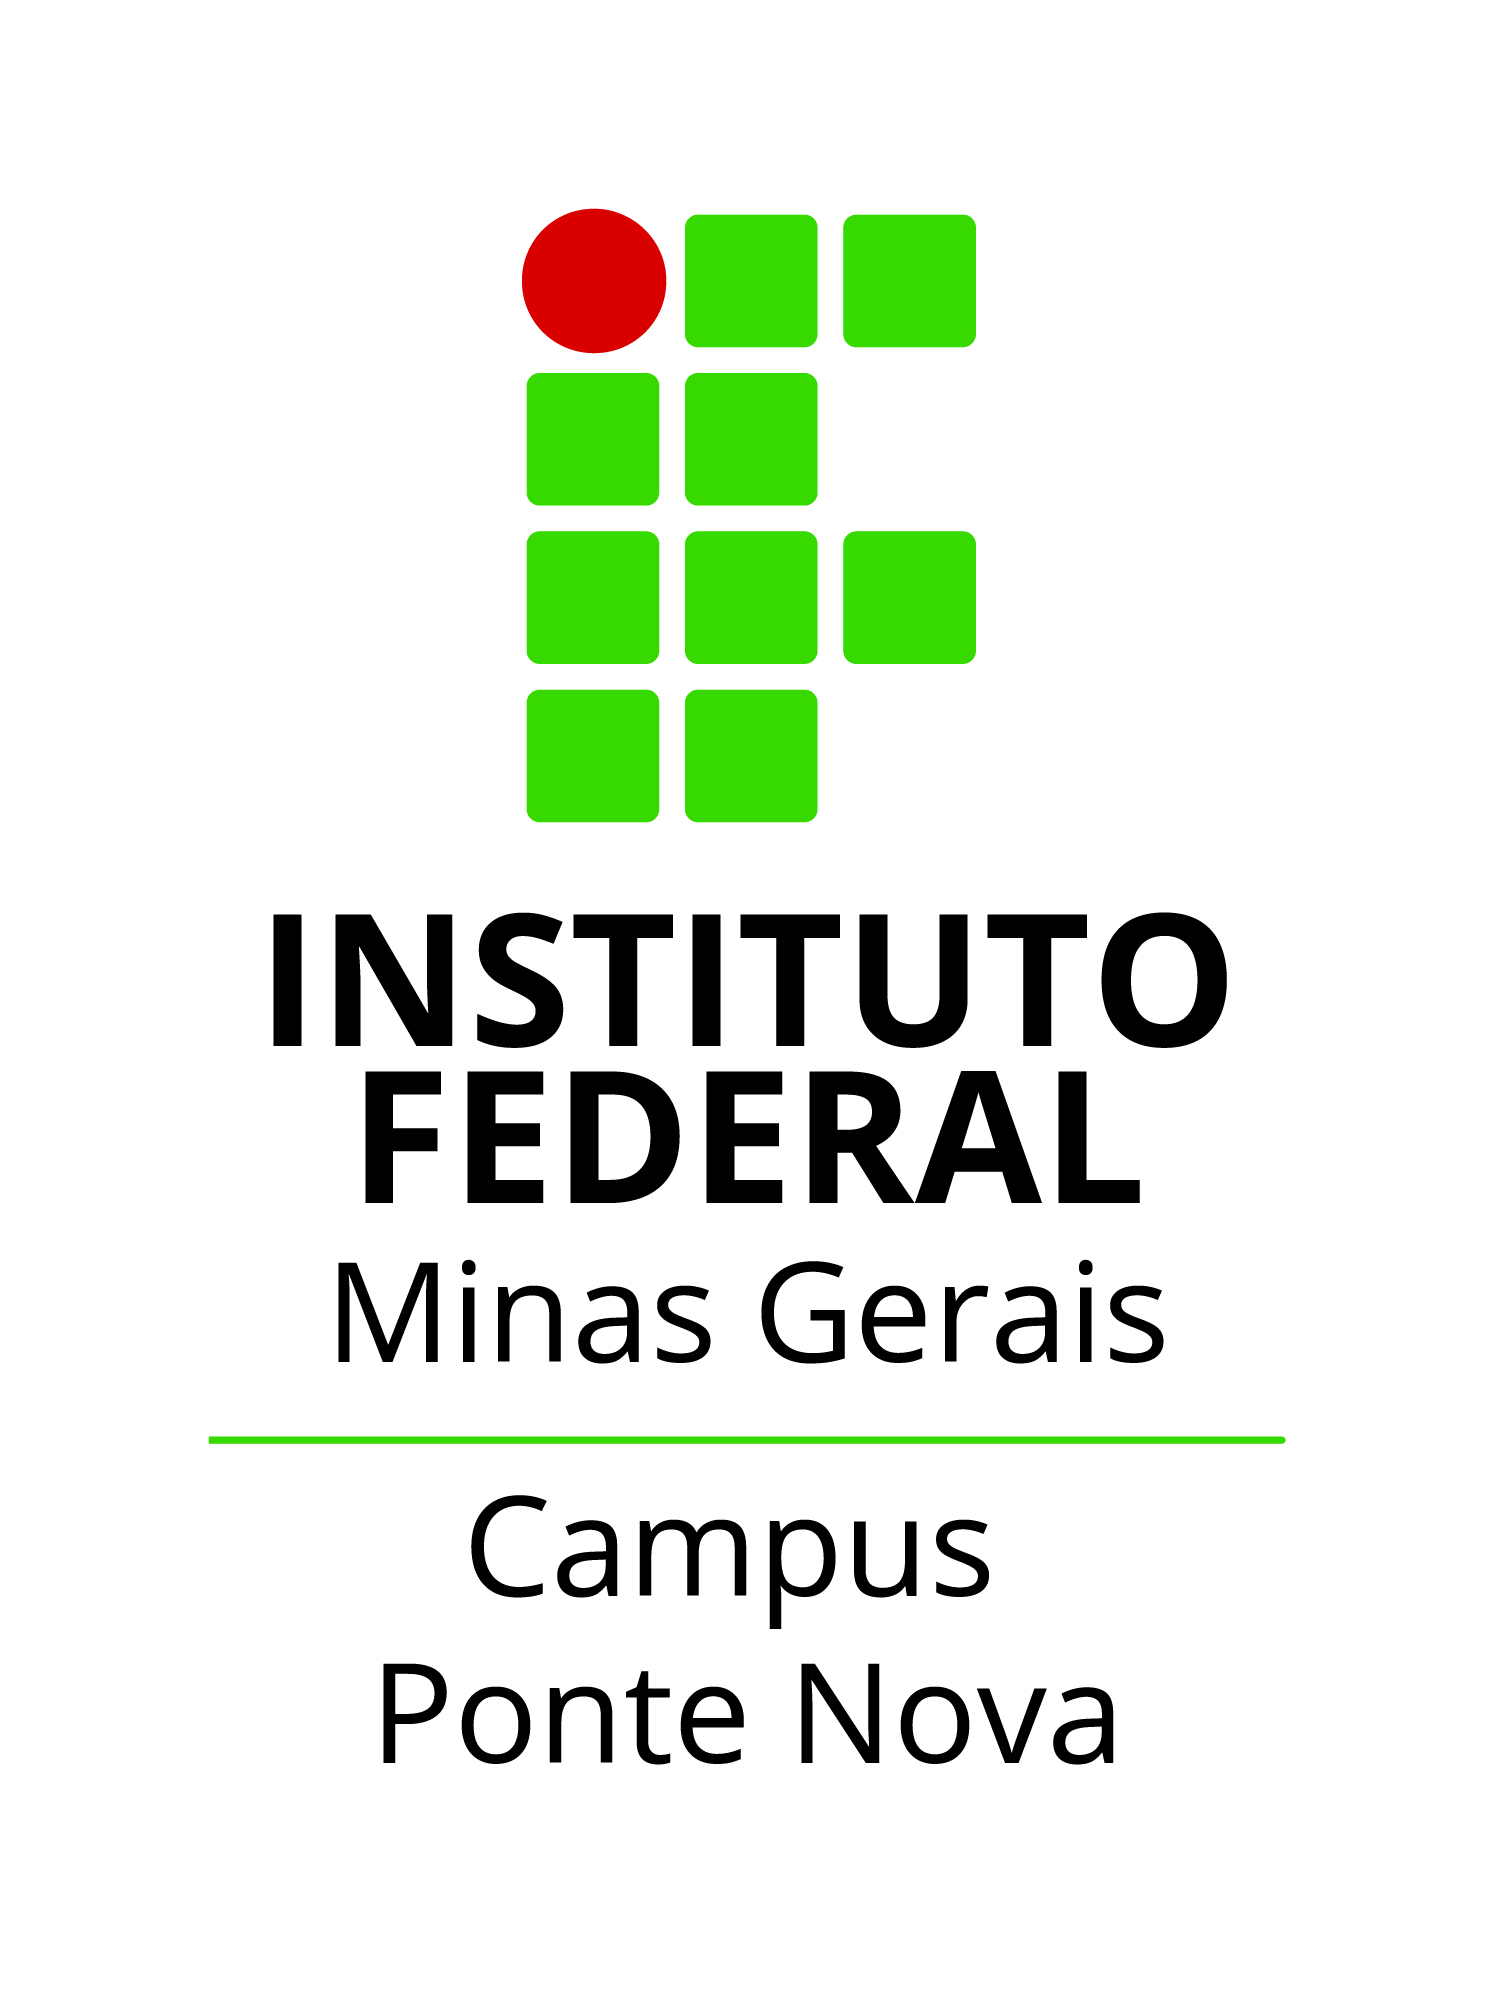 IFMG_Ponte Nova_Vertical.jpg